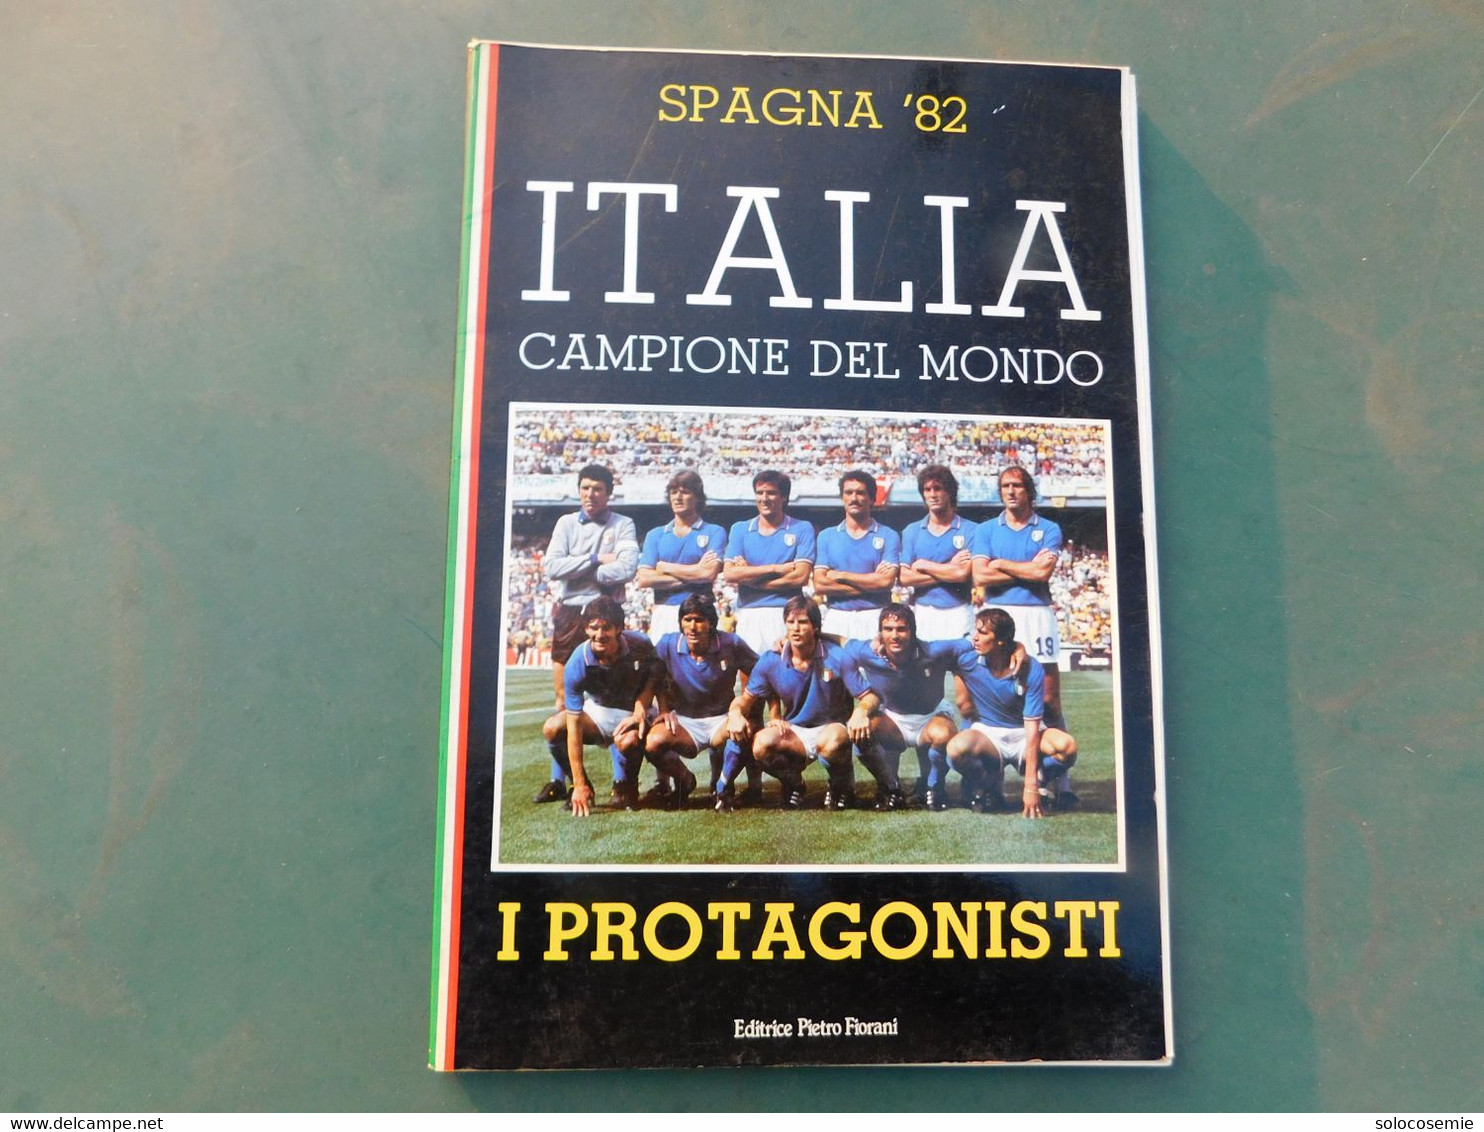 Spagna '82 - ITALIA CAMPIONE DEL MONDO  -I Protagonisti, Editrice Fiorani - Te Identificeren